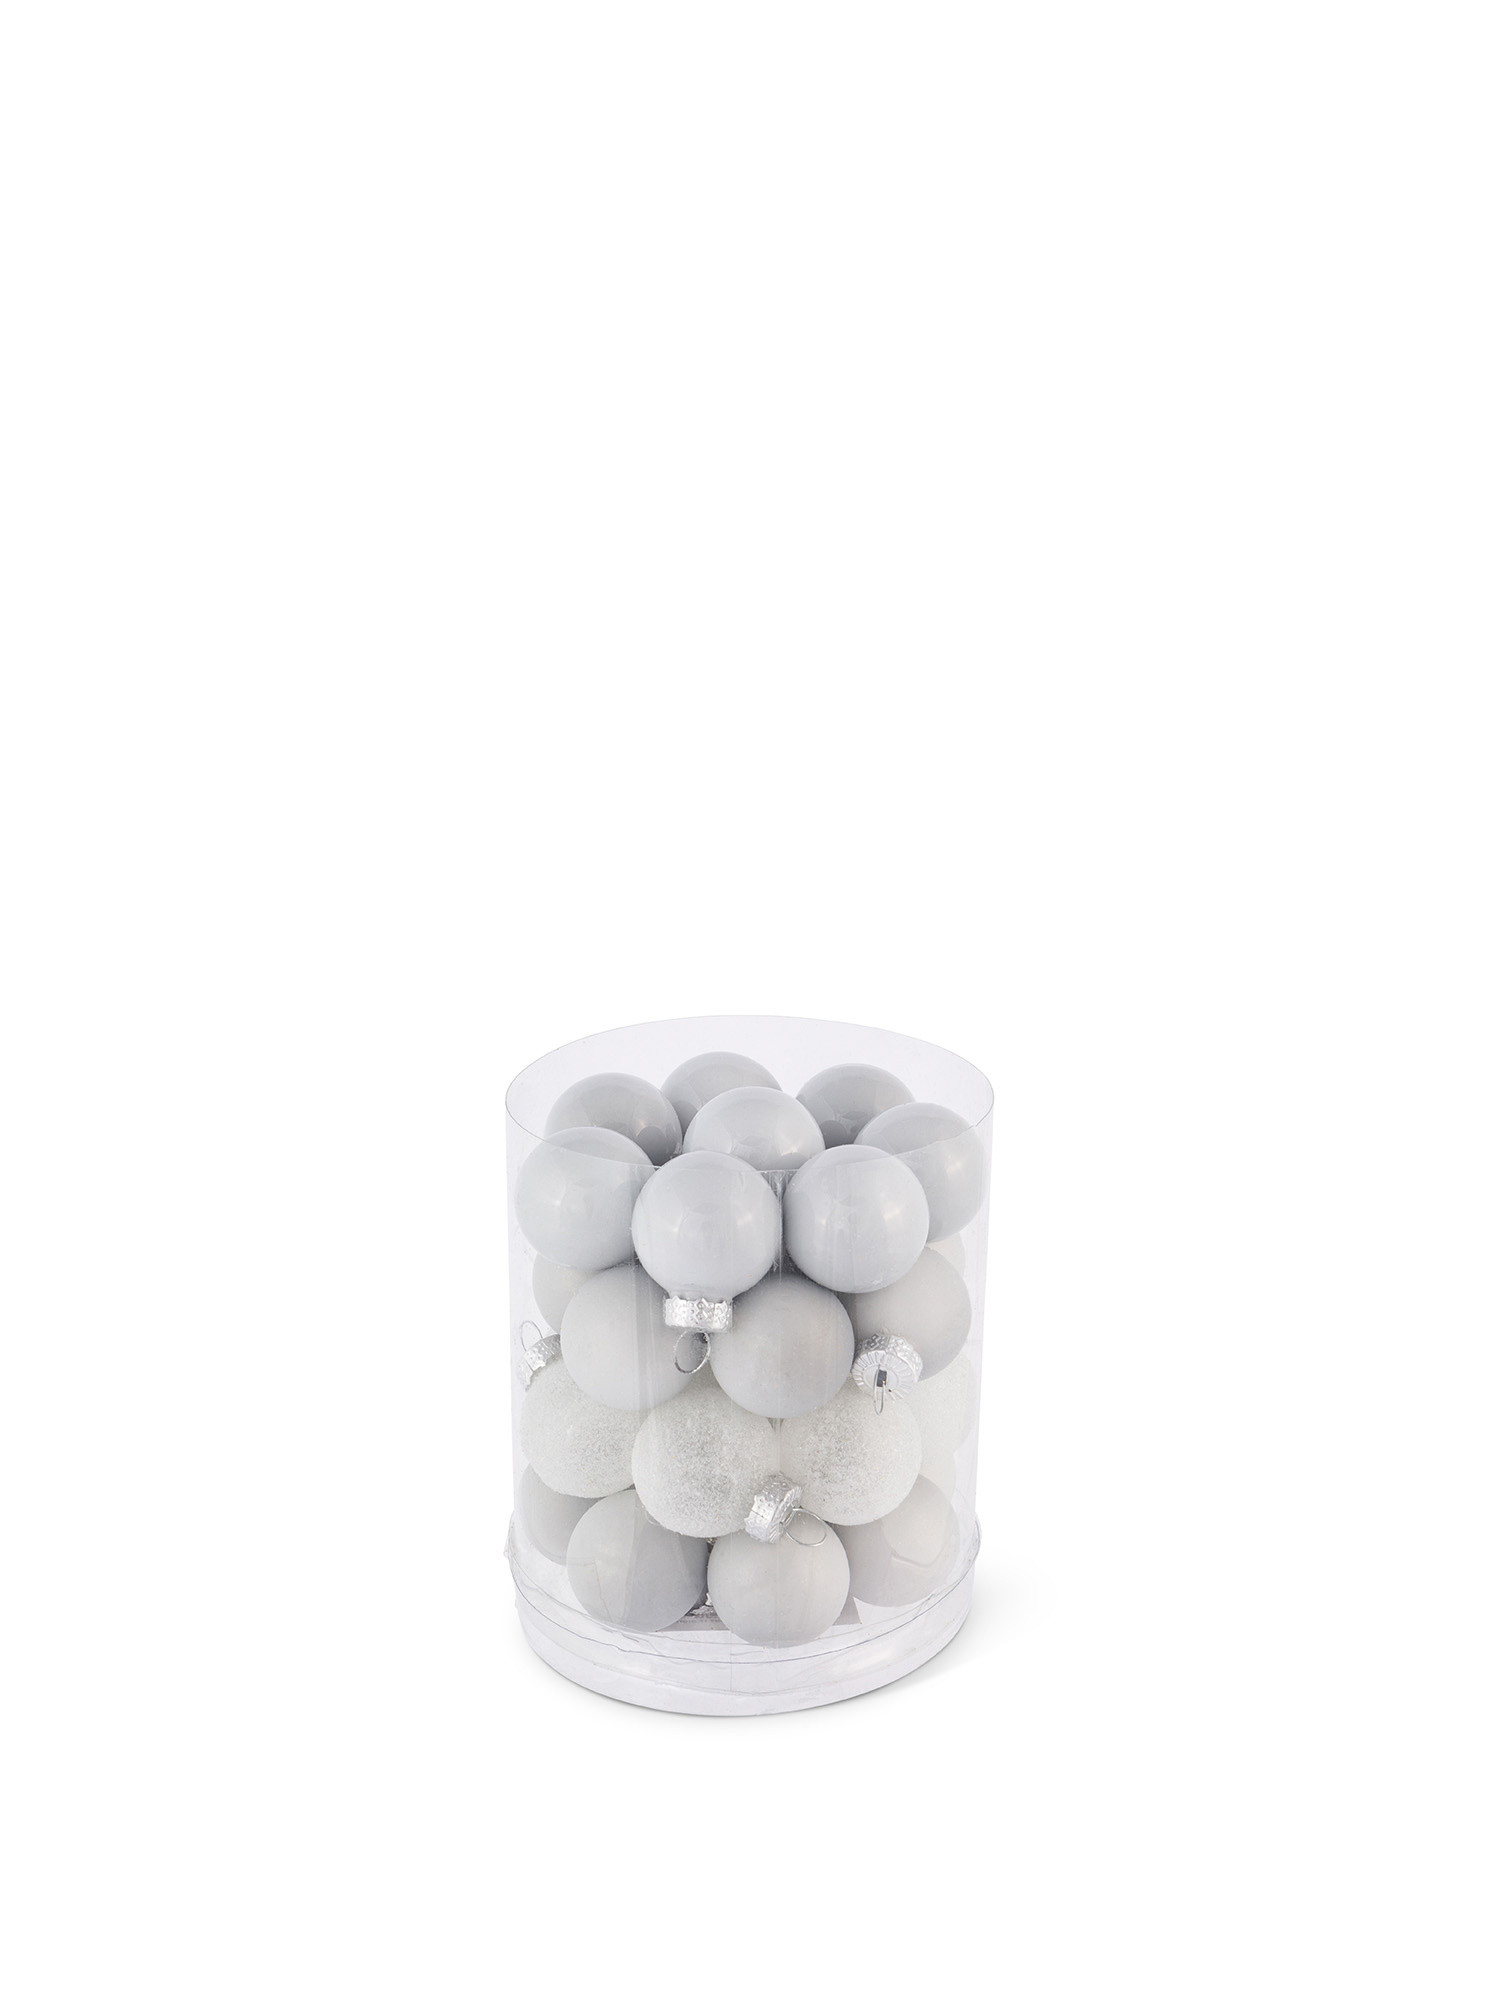 Set 32 glass spheres, White, large image number 0